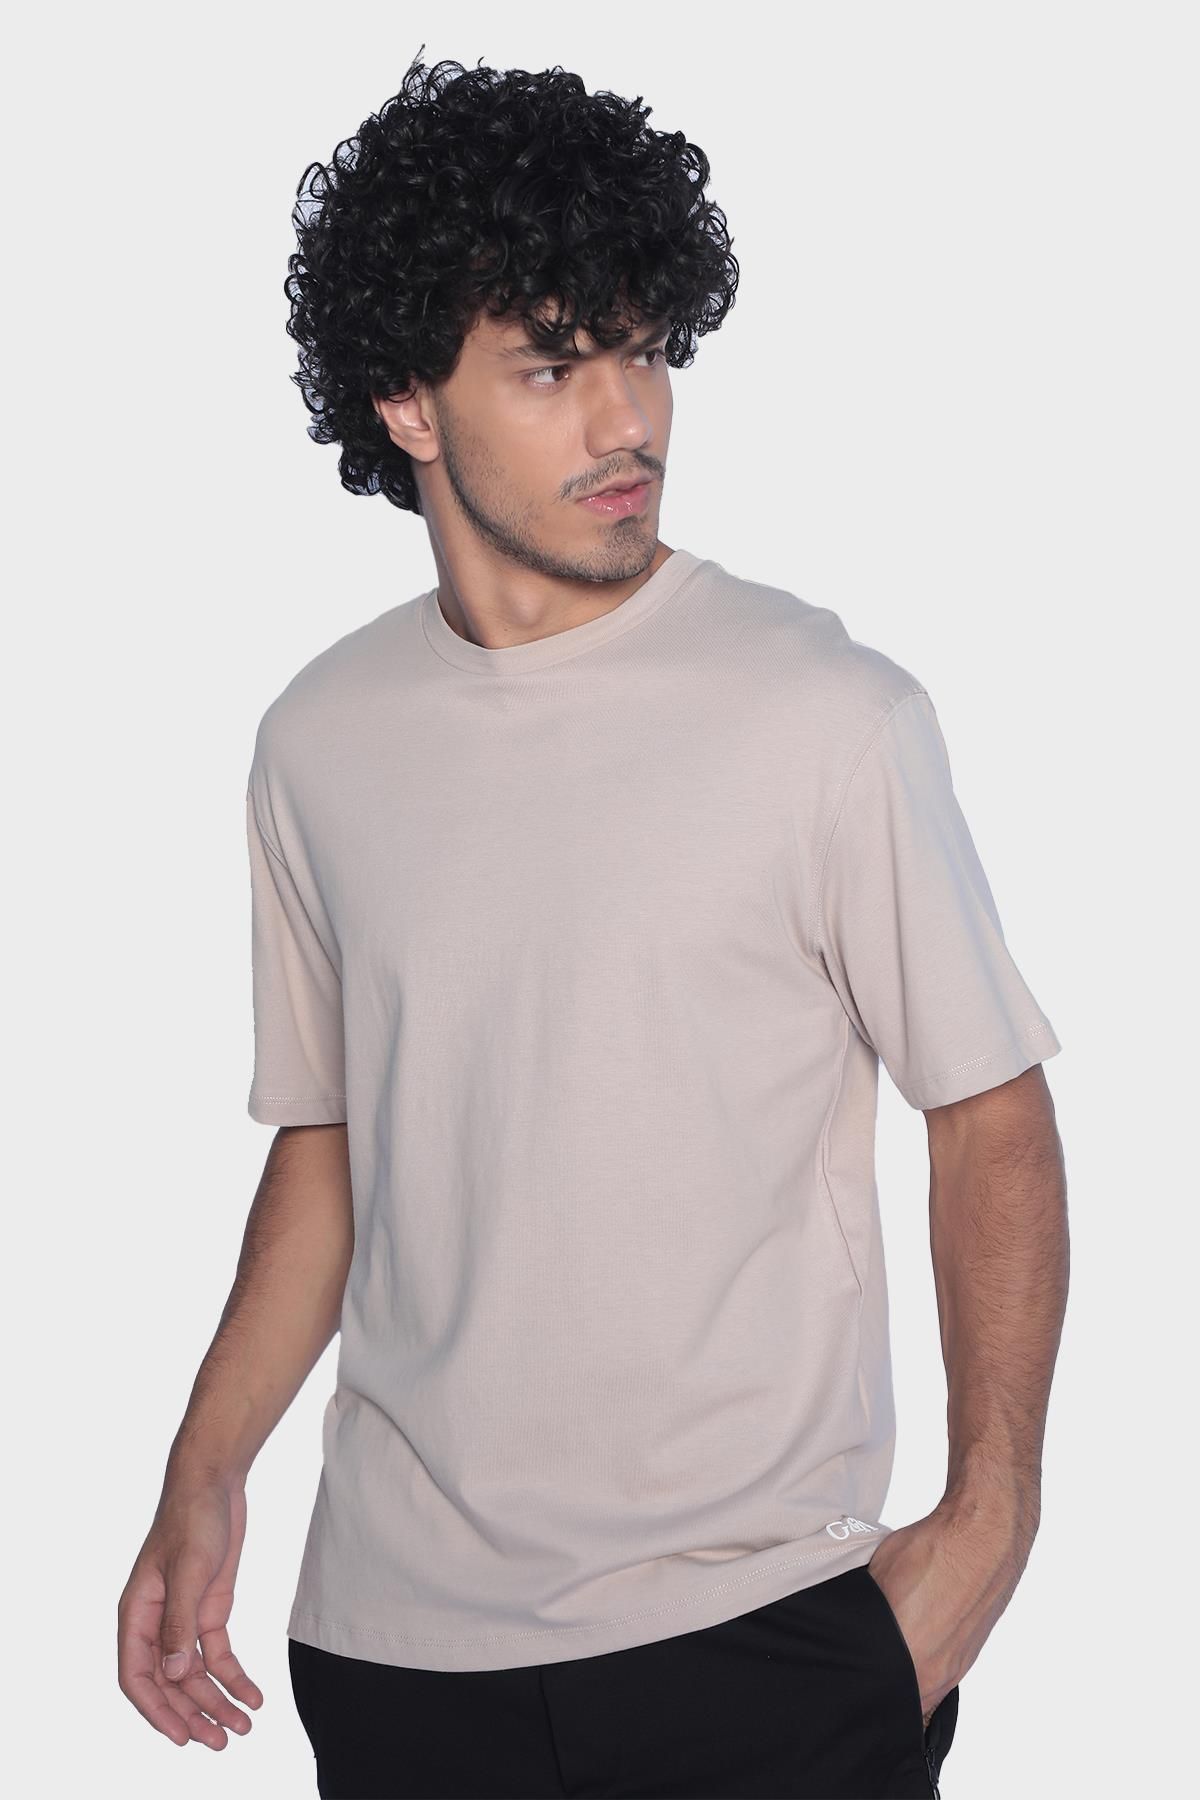 Crewneck short sleeve mens t-shirt - Cream